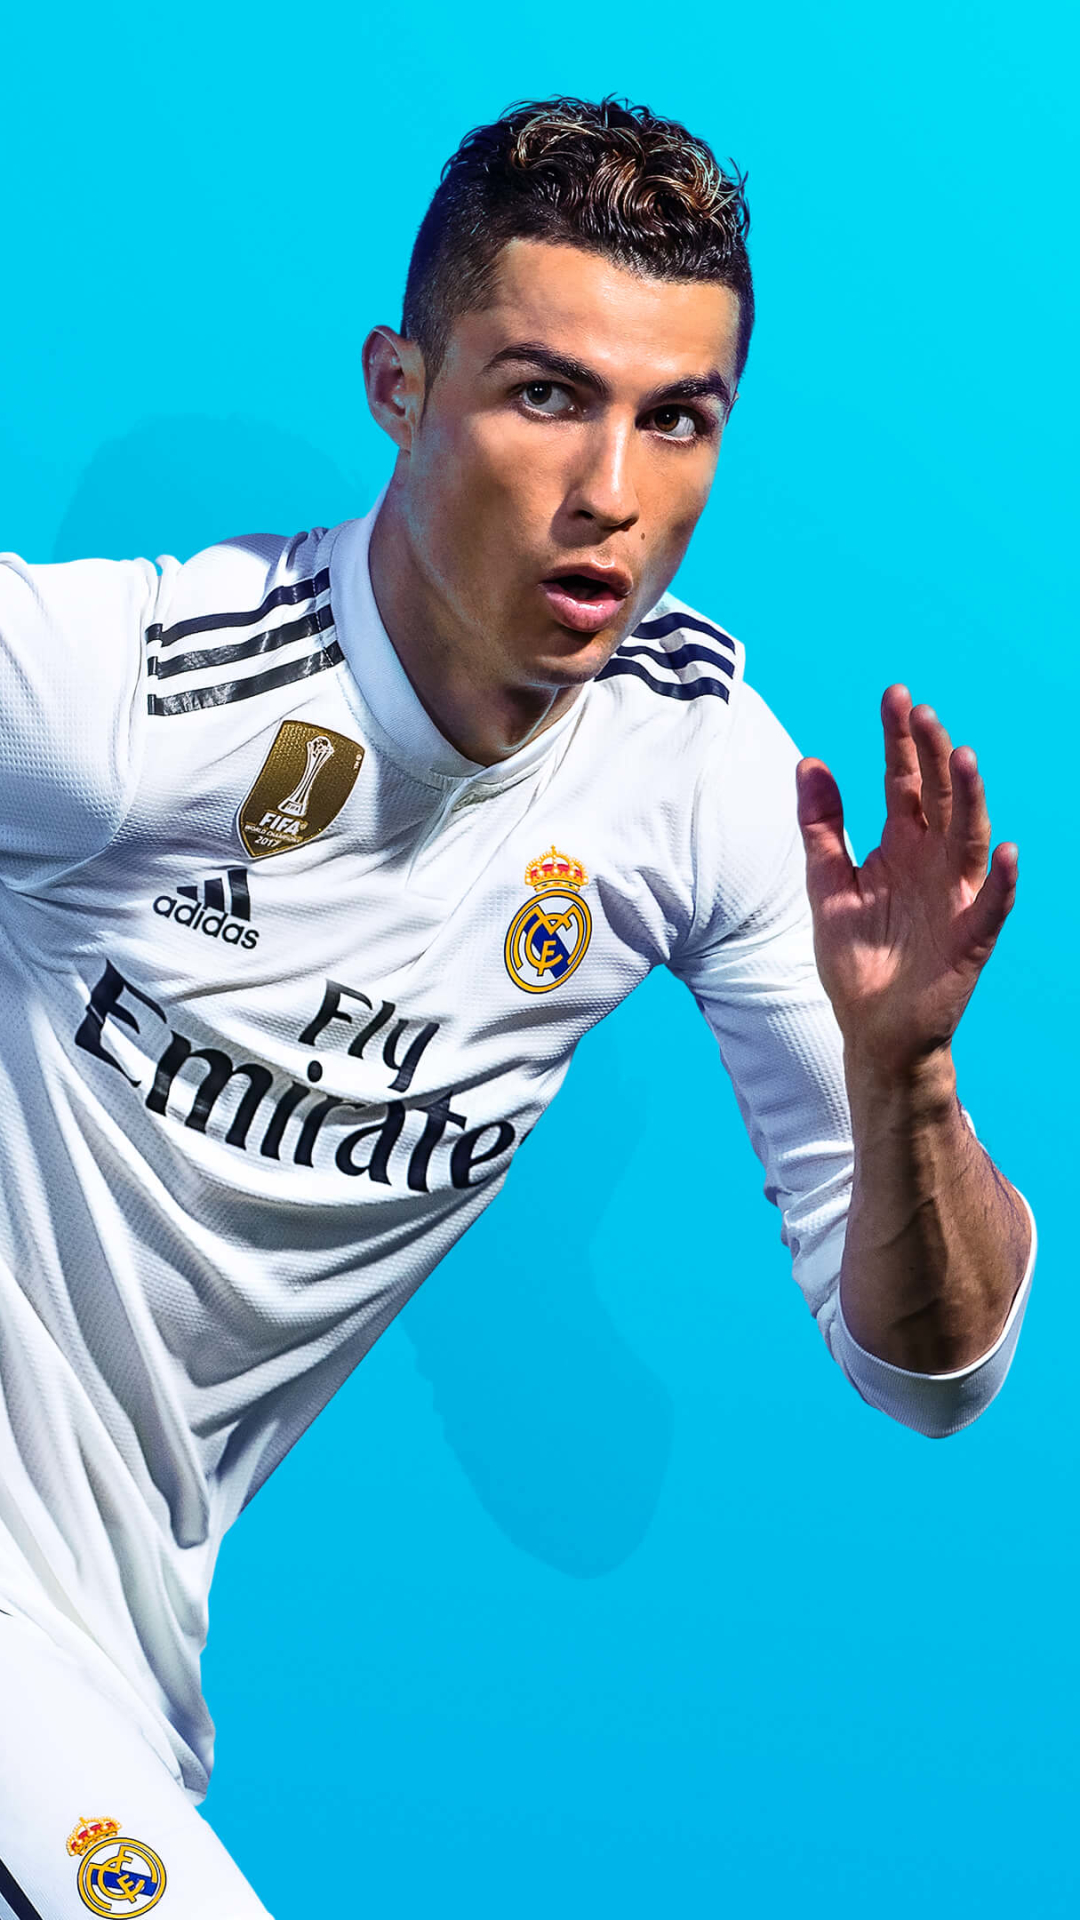 Mobile wallpaper: Cristiano Ronaldo, Video Game, Soccer, Fifa 19, 1310426  download the picture for free.